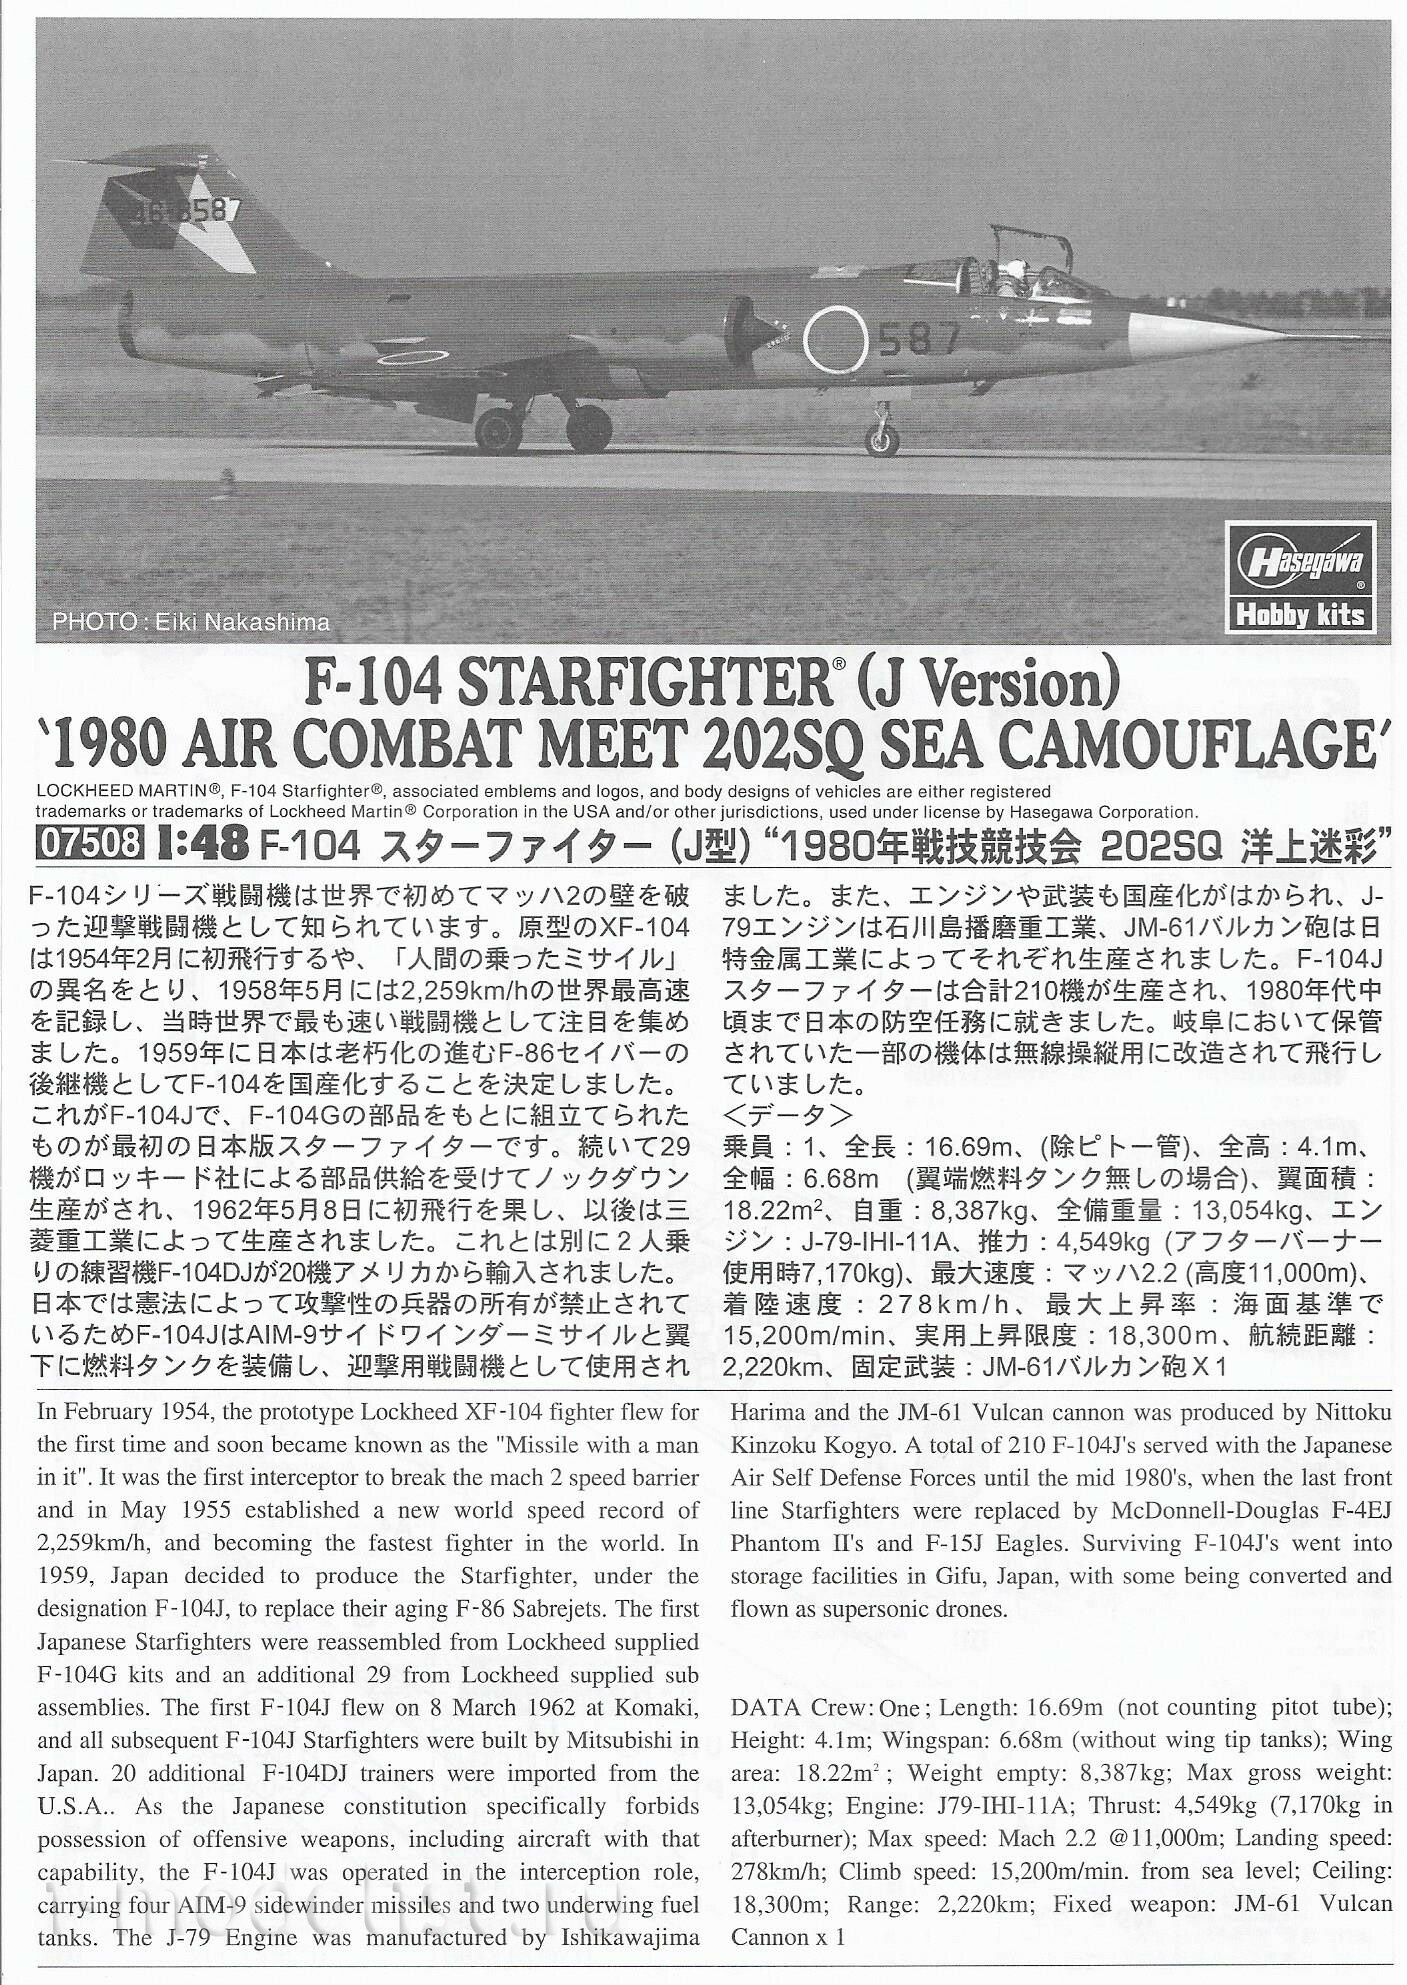 07508 Hasegawa 1/48 F-104 Starfighter (J Version)